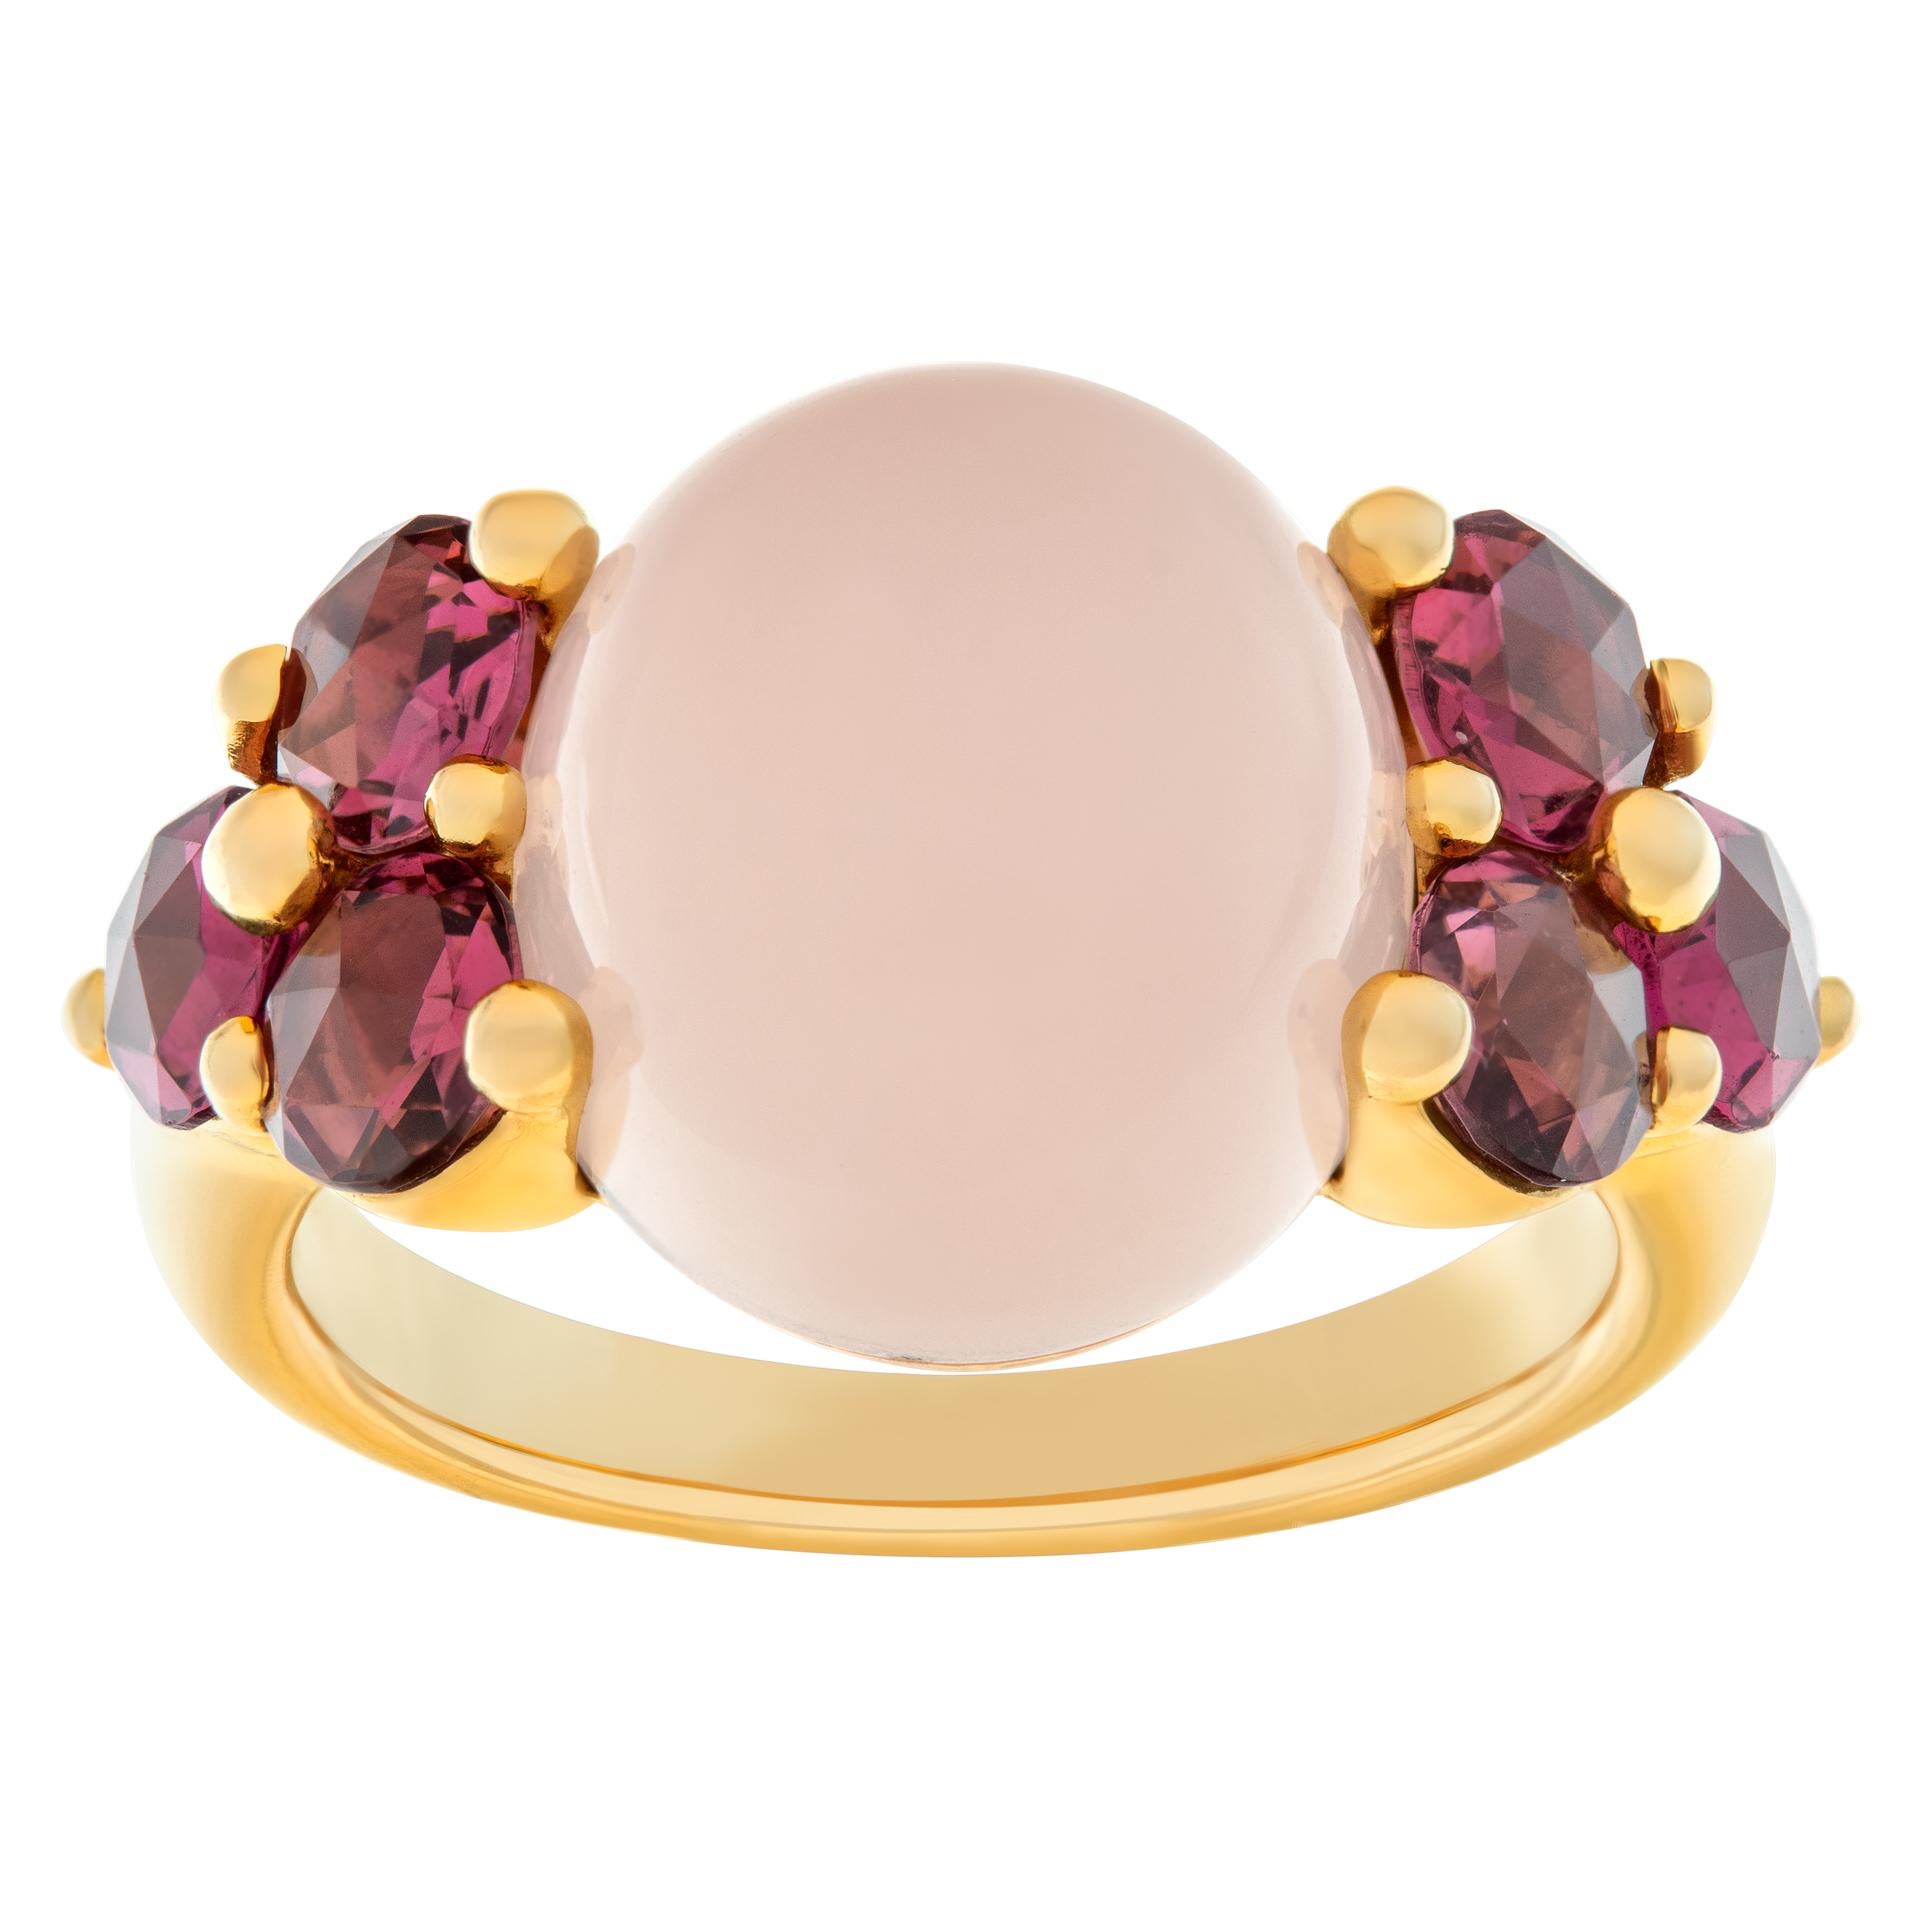 Pomellato Luna ring in rose gold w/ cabochon rose quartz and pink tourmaline